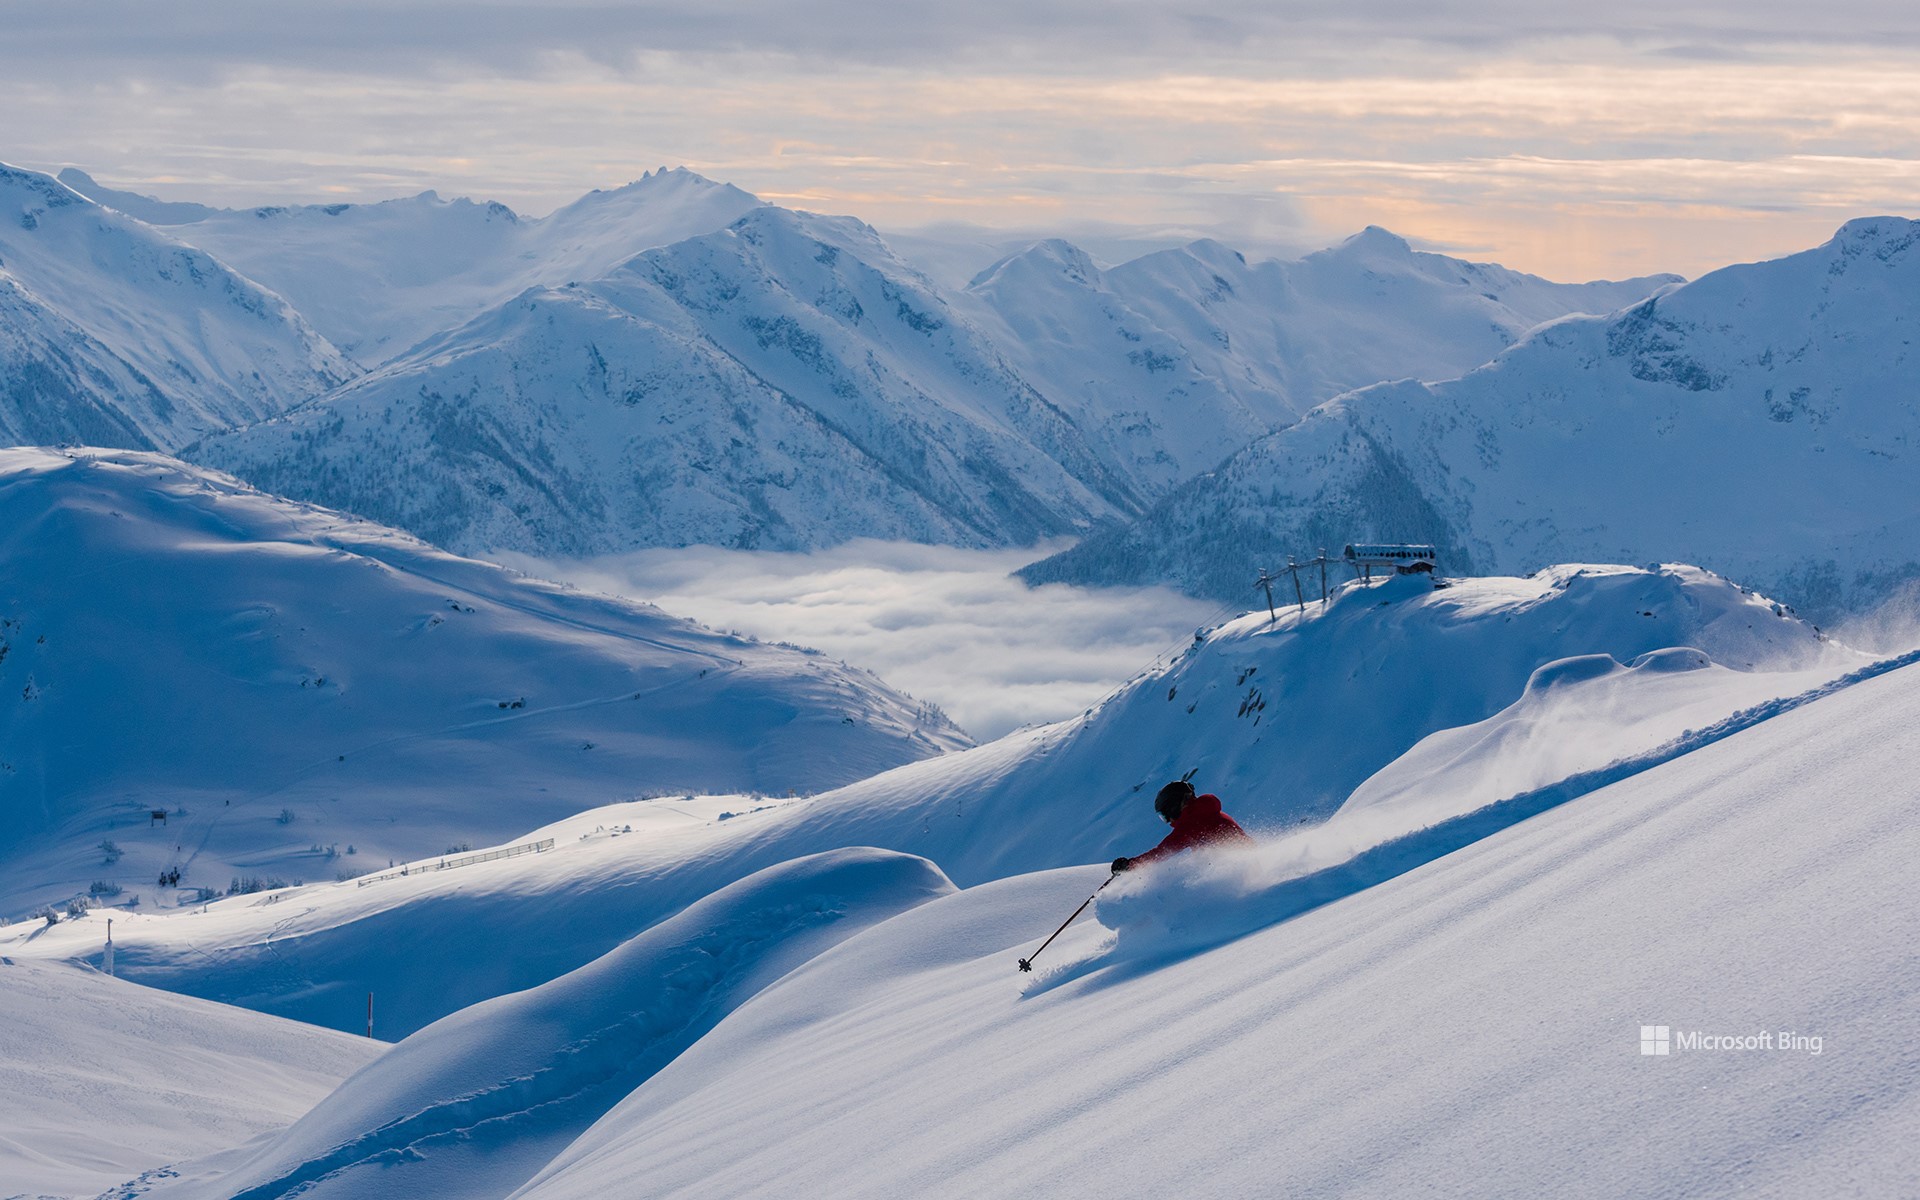 Skier making a turn in pristine snow in Whistler, B.C.